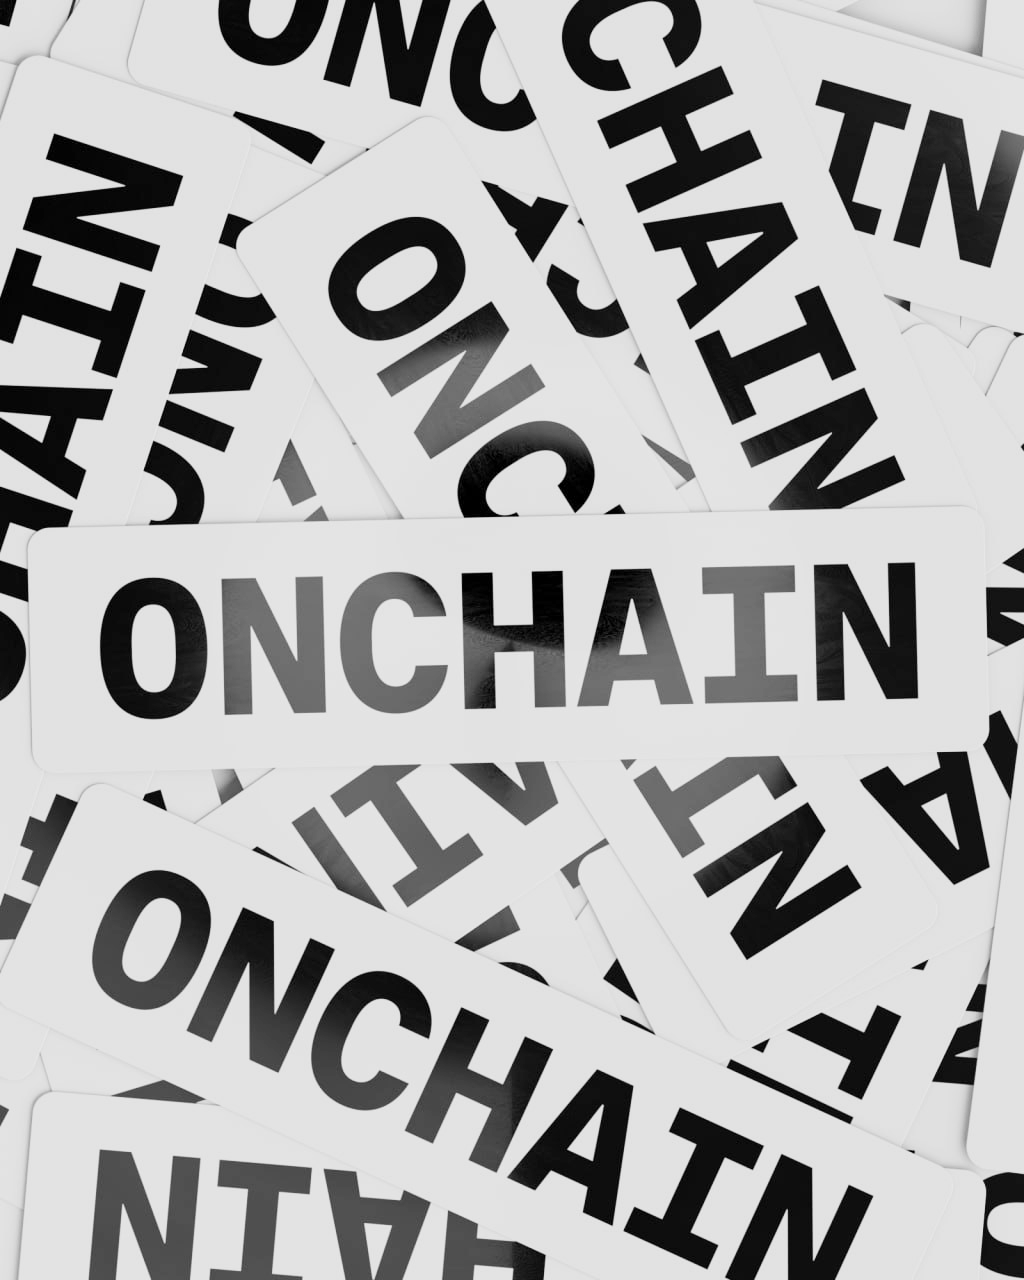 “Onchain is the next online” sticker